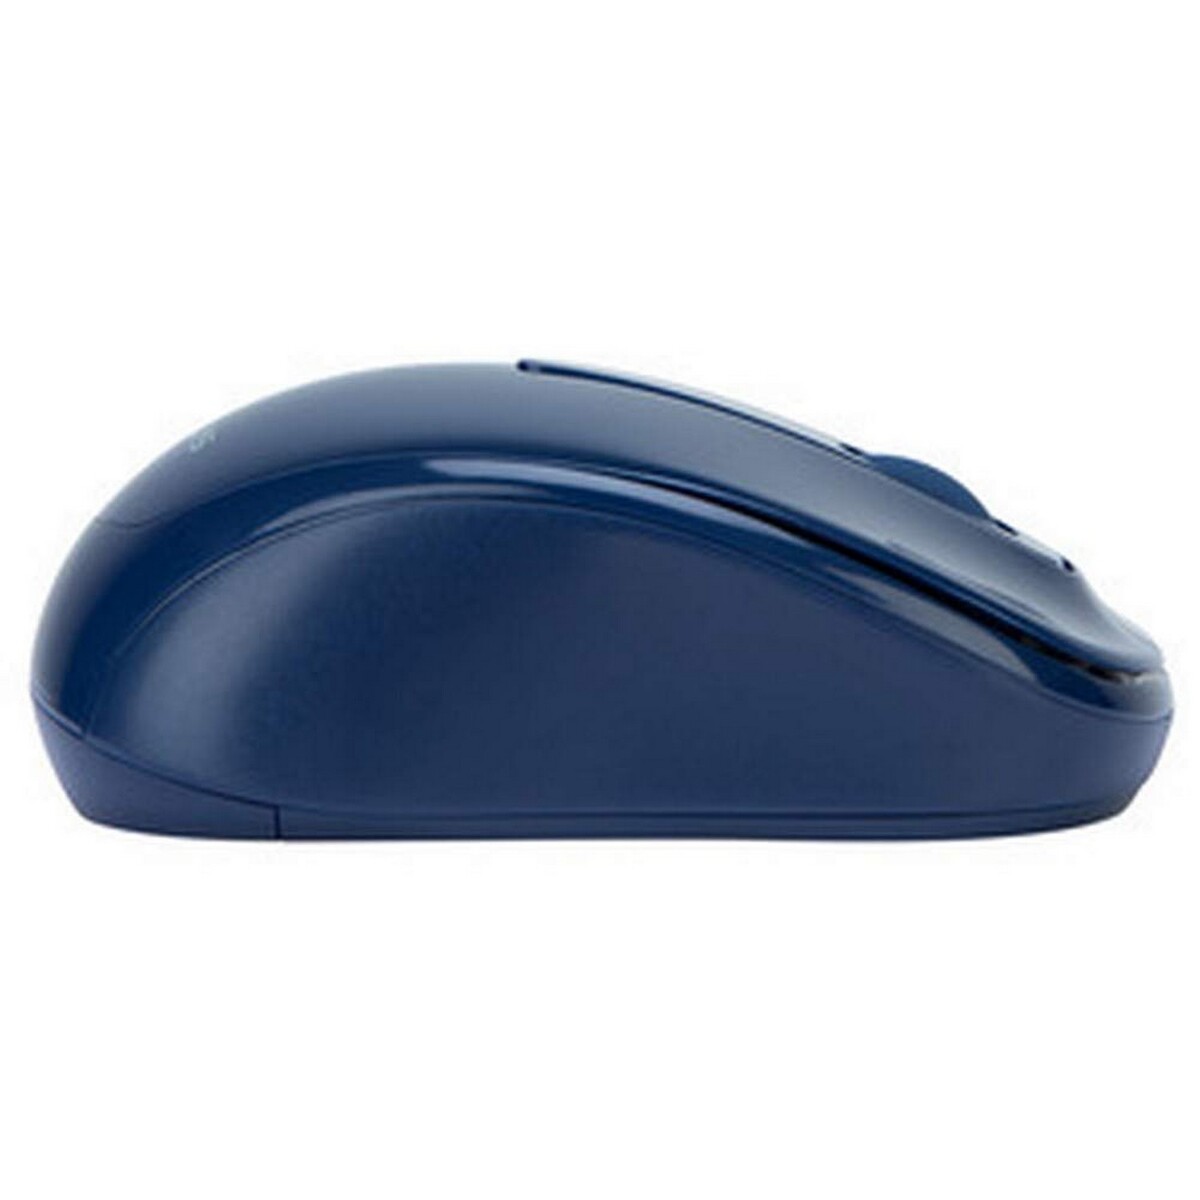 Targus Wireless Mouse W600 Blue